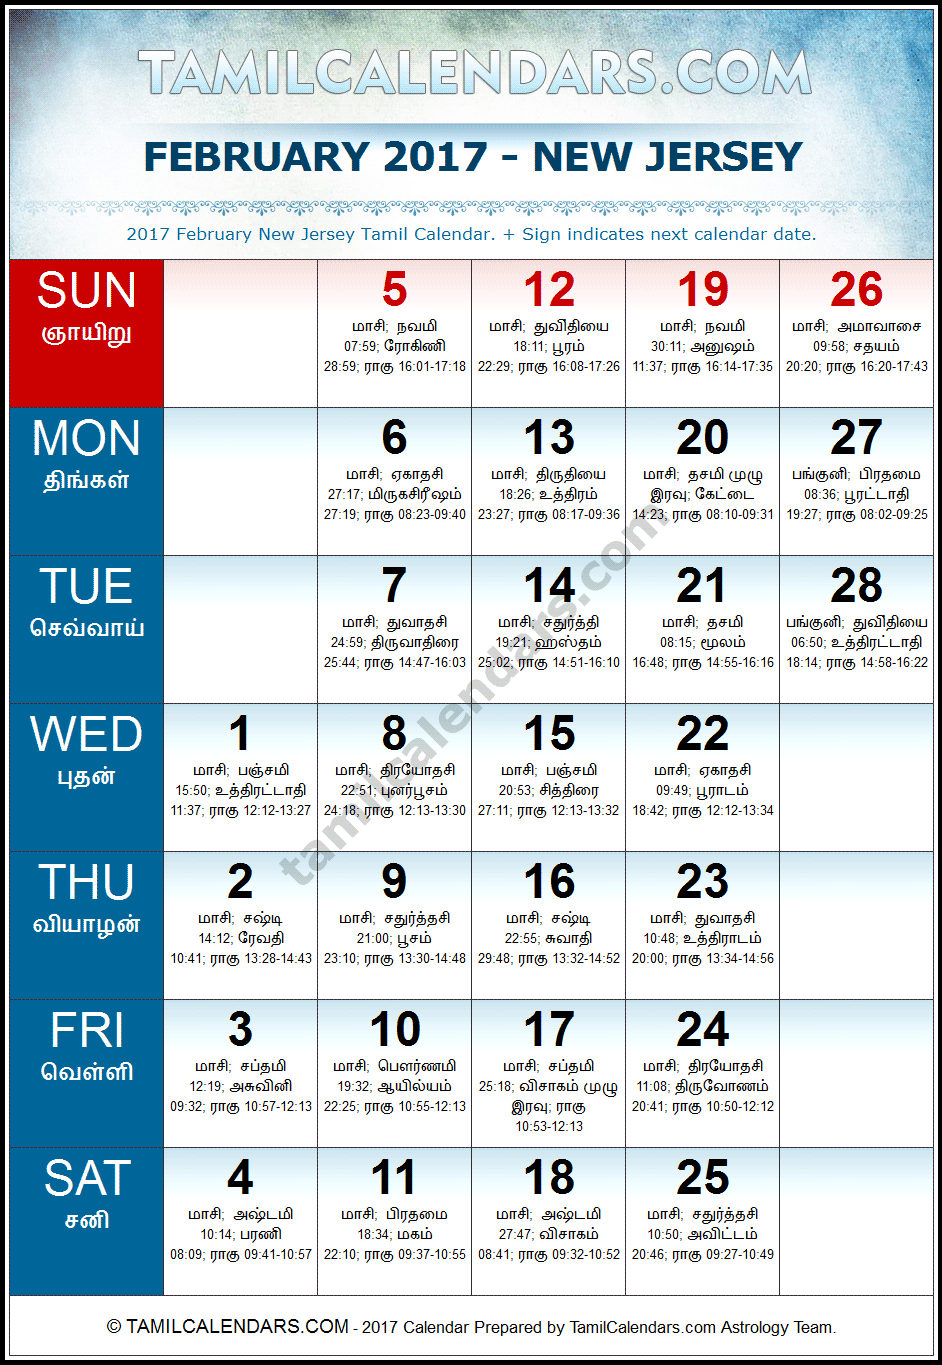 February 2017 Tamil Calendar for New Jersey, USA